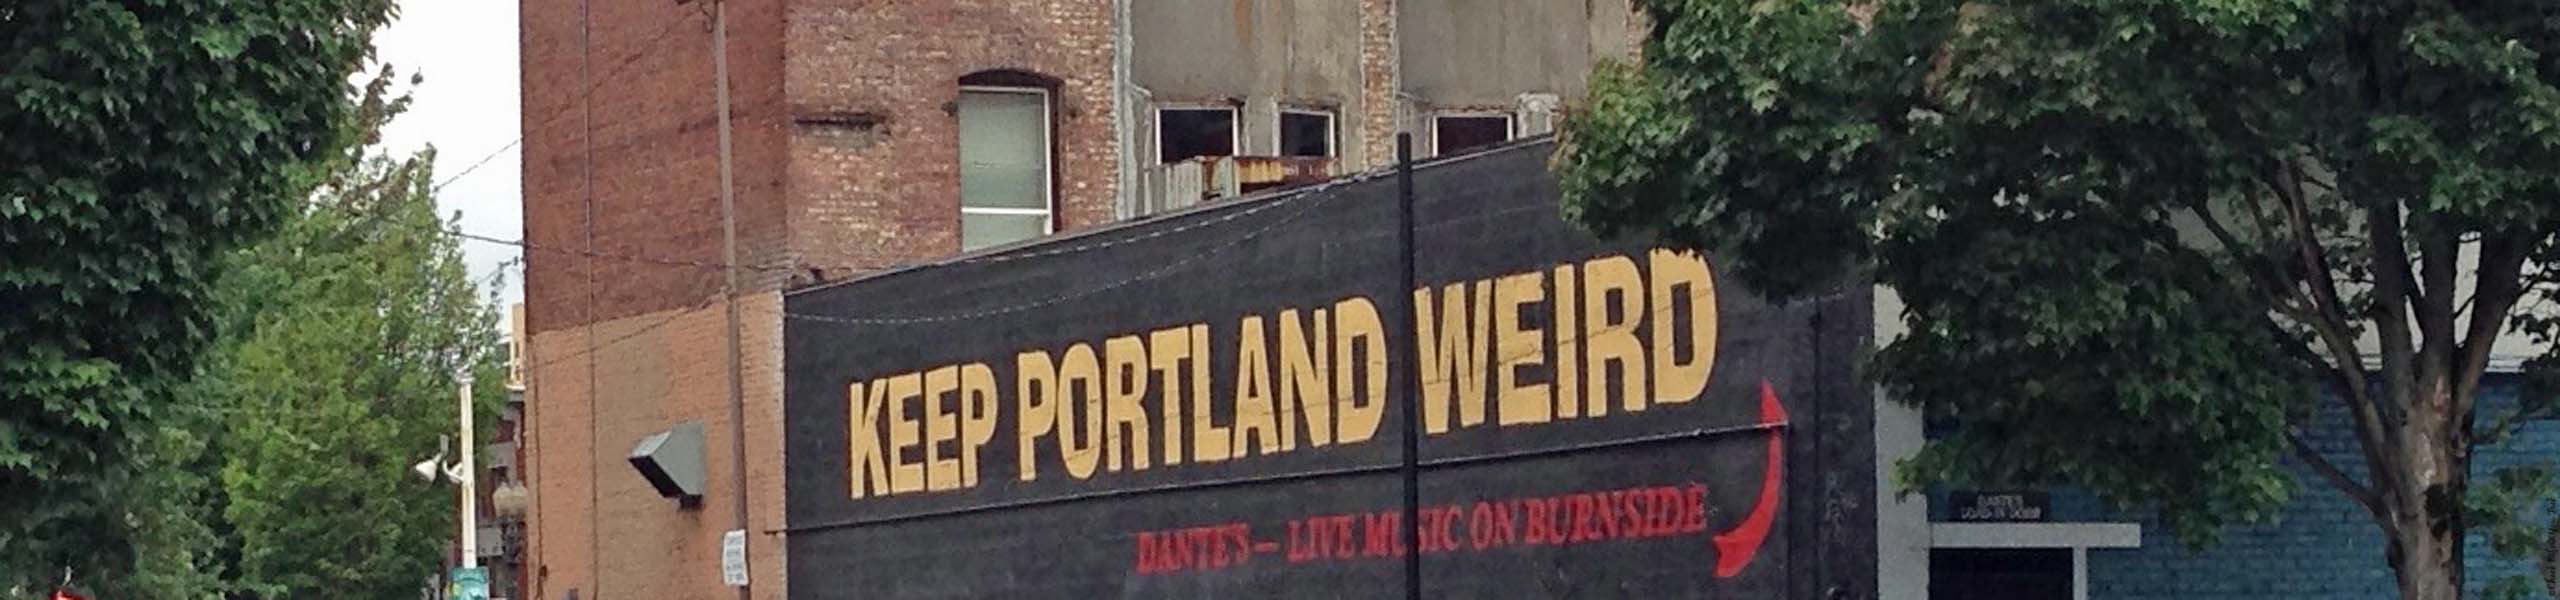 Keep Portland Weird - Portland, Oregon